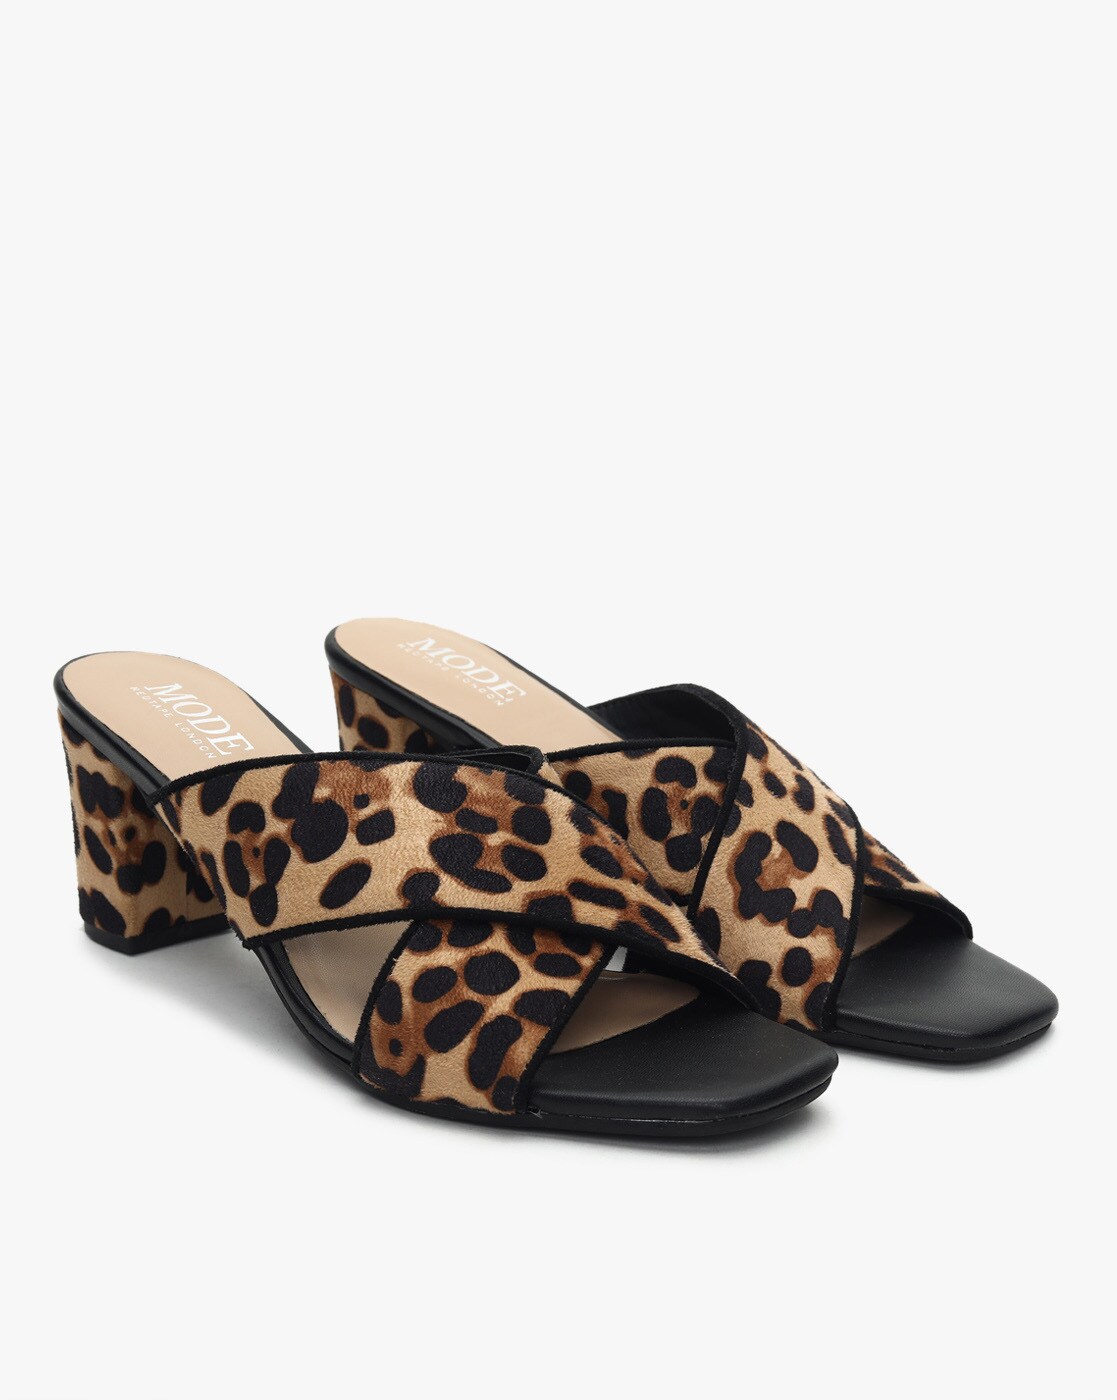 Fab Leopard Print Pointy Toe Block Heels | Cinderella Shoes